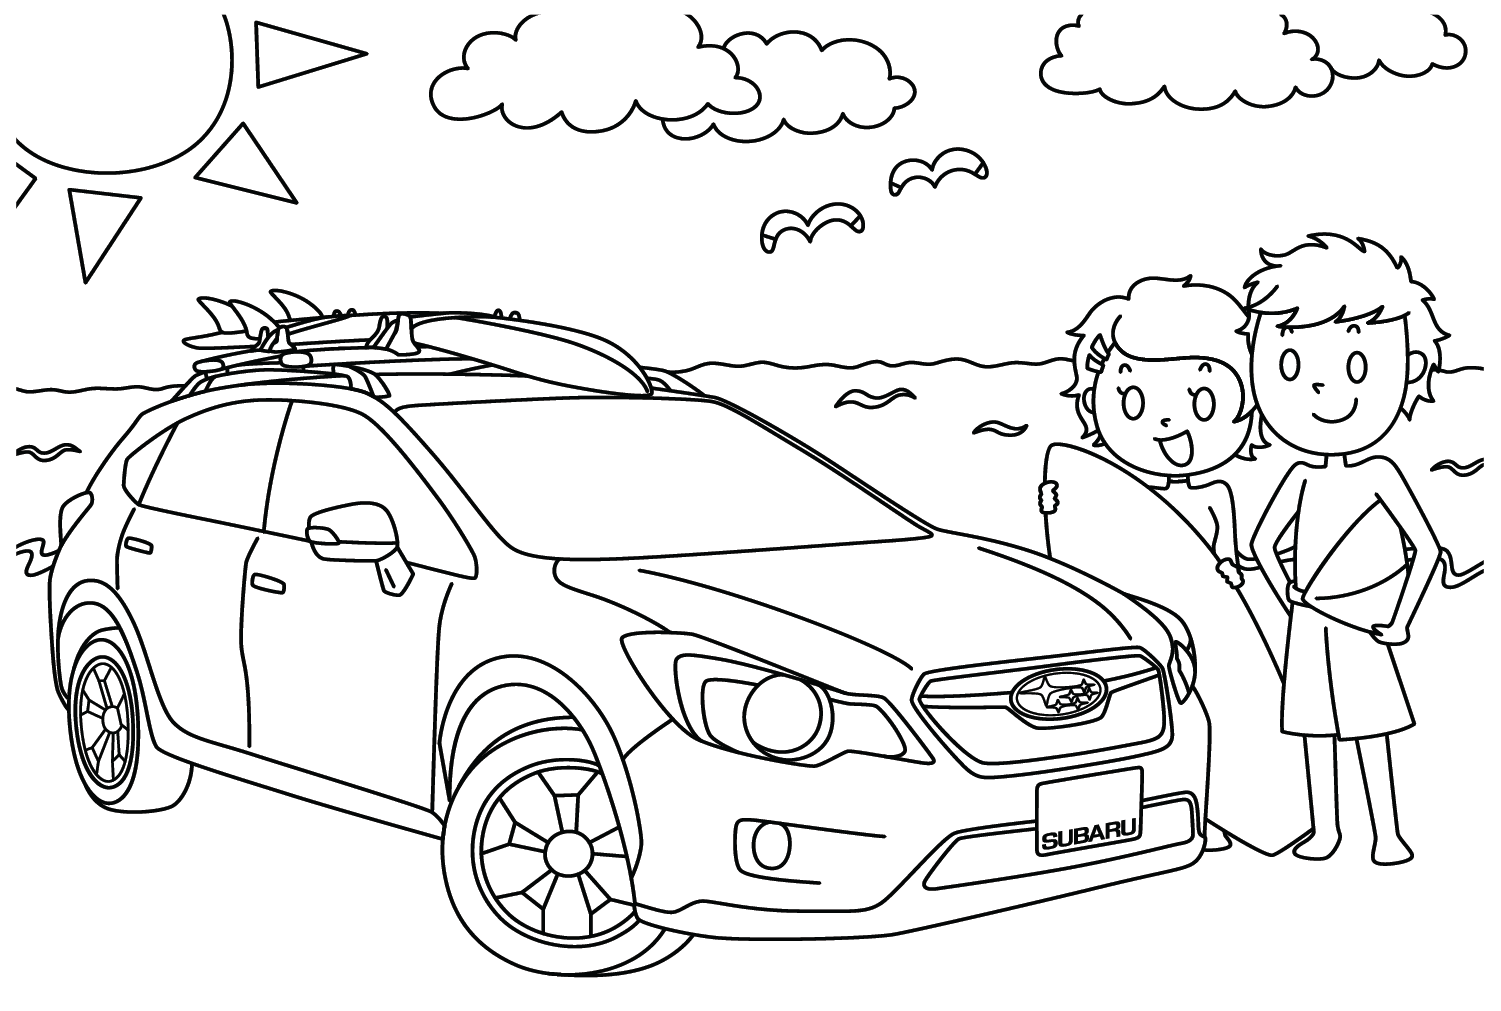 Subaru Picture to Color from Subaru